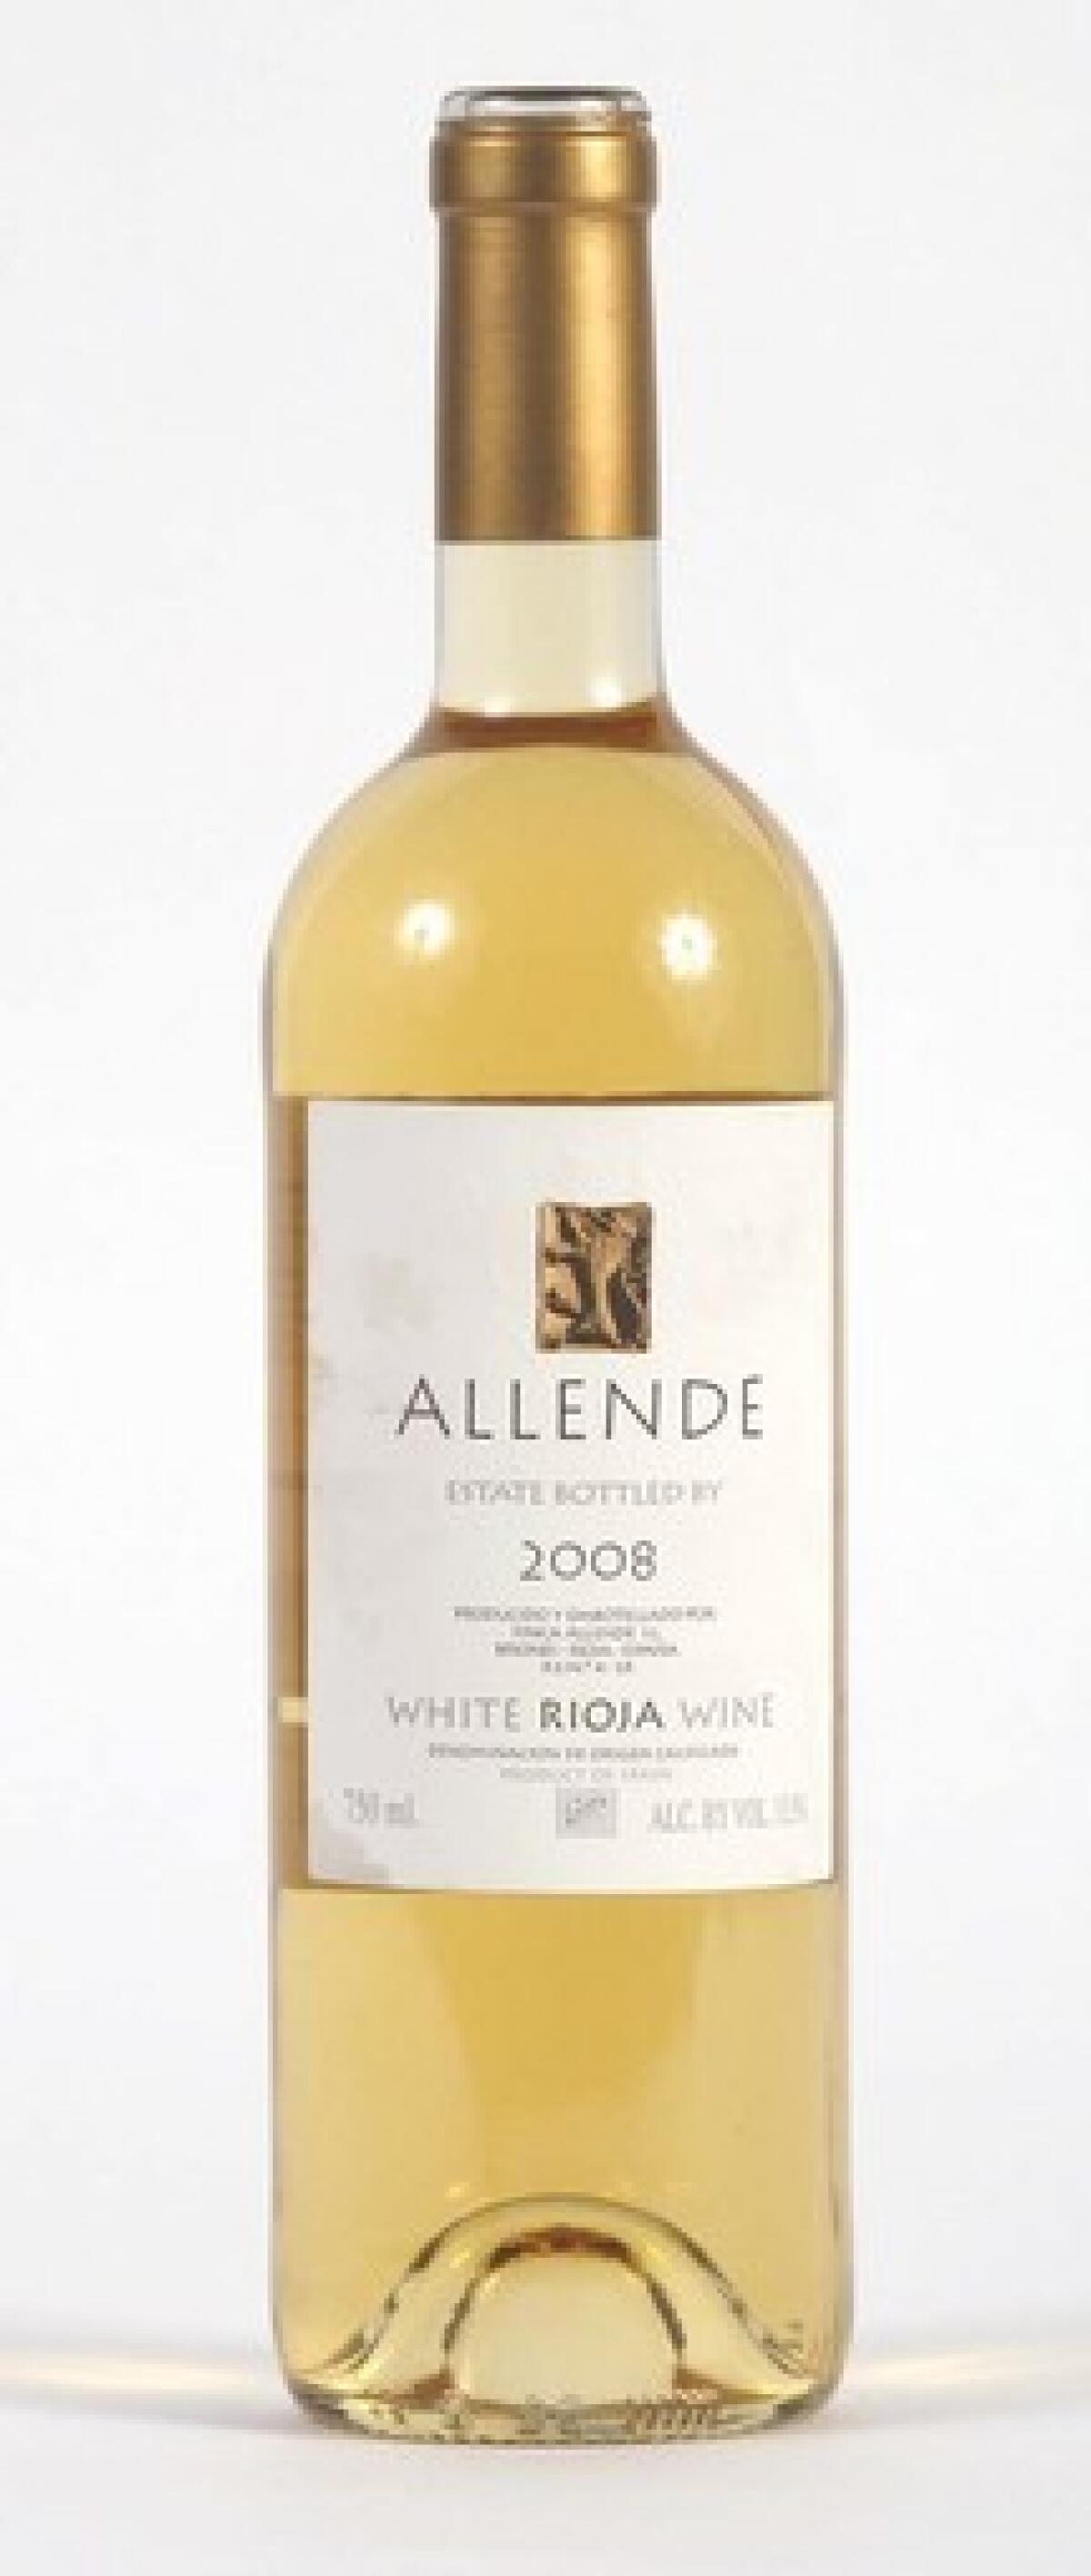 Allende 2008 white rioja.